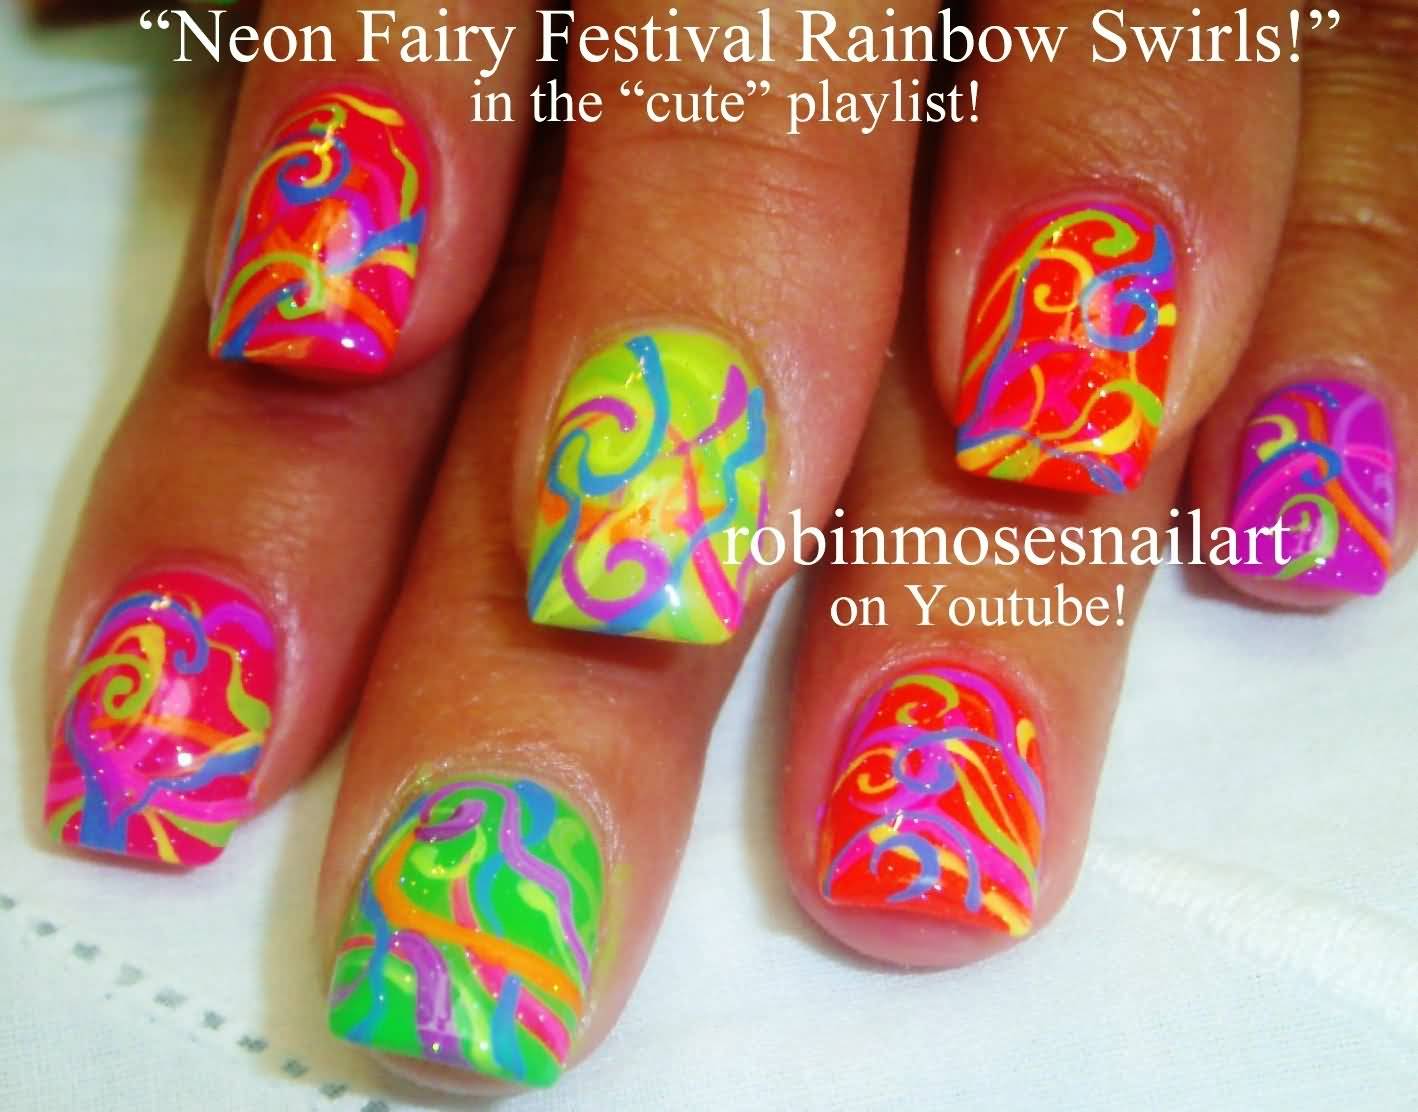 Neon Fairy Festival Rainbow Swirls Design